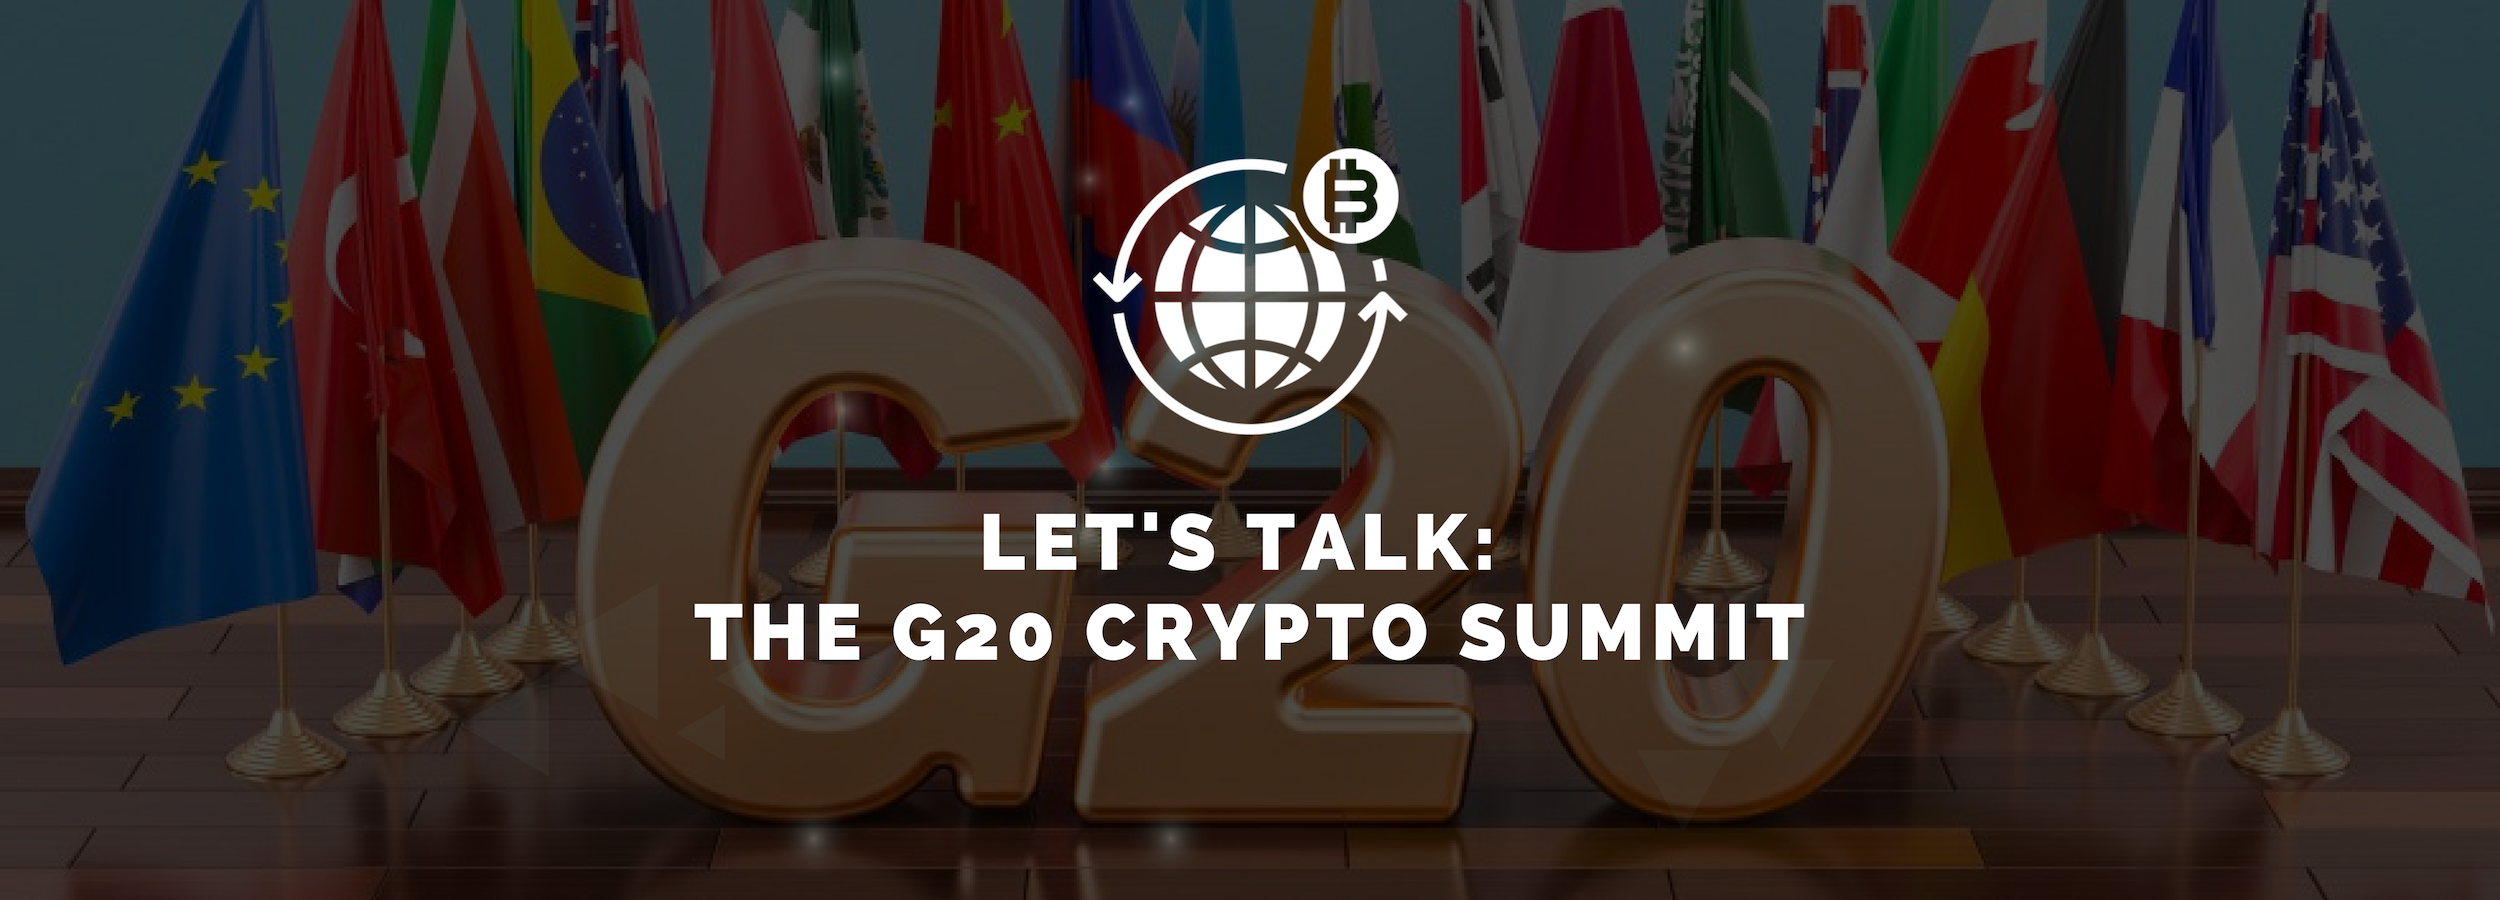 Let’s Talk: The G20 Crypto Summit